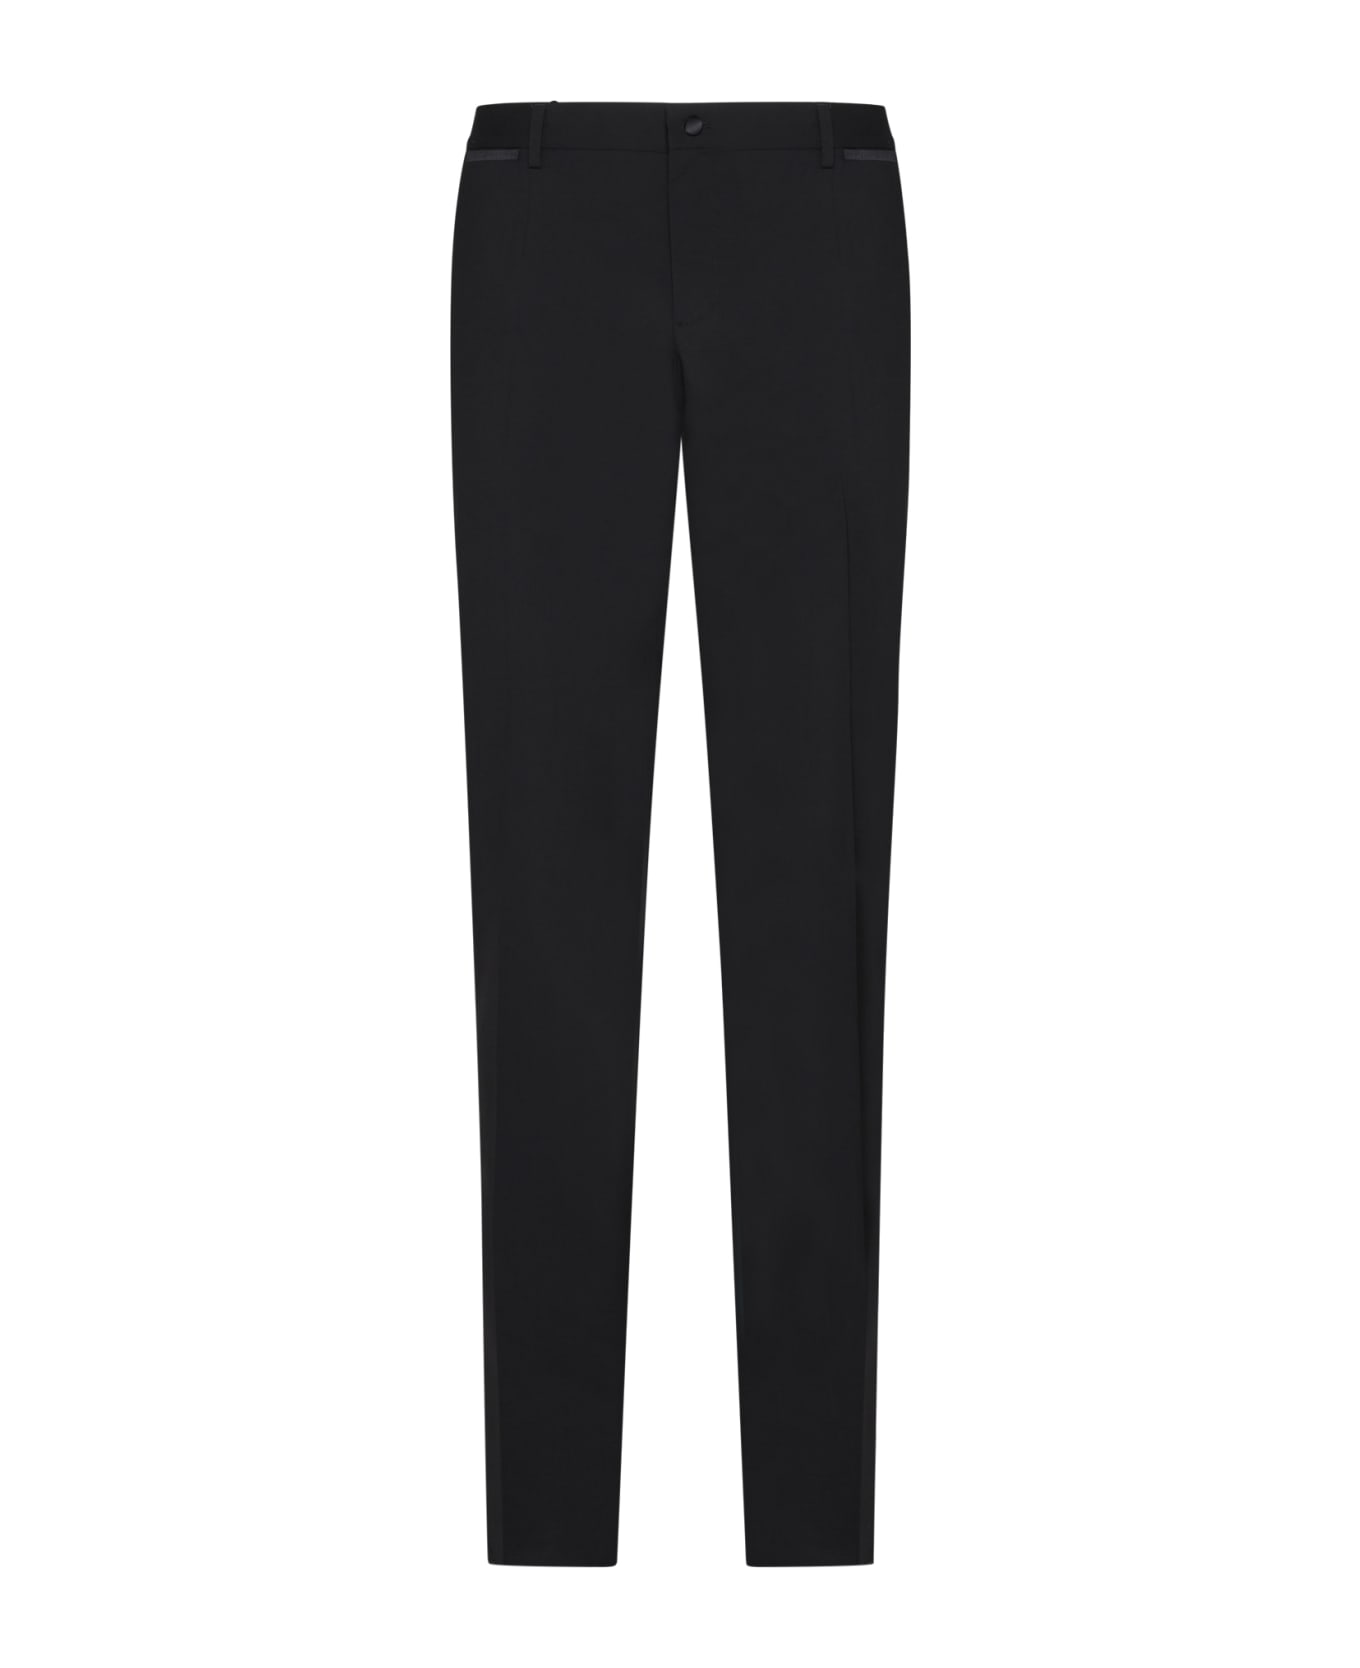 Dolce & Gabbana Stretch Wool Tuxedo Trousers - Nero ボトムス